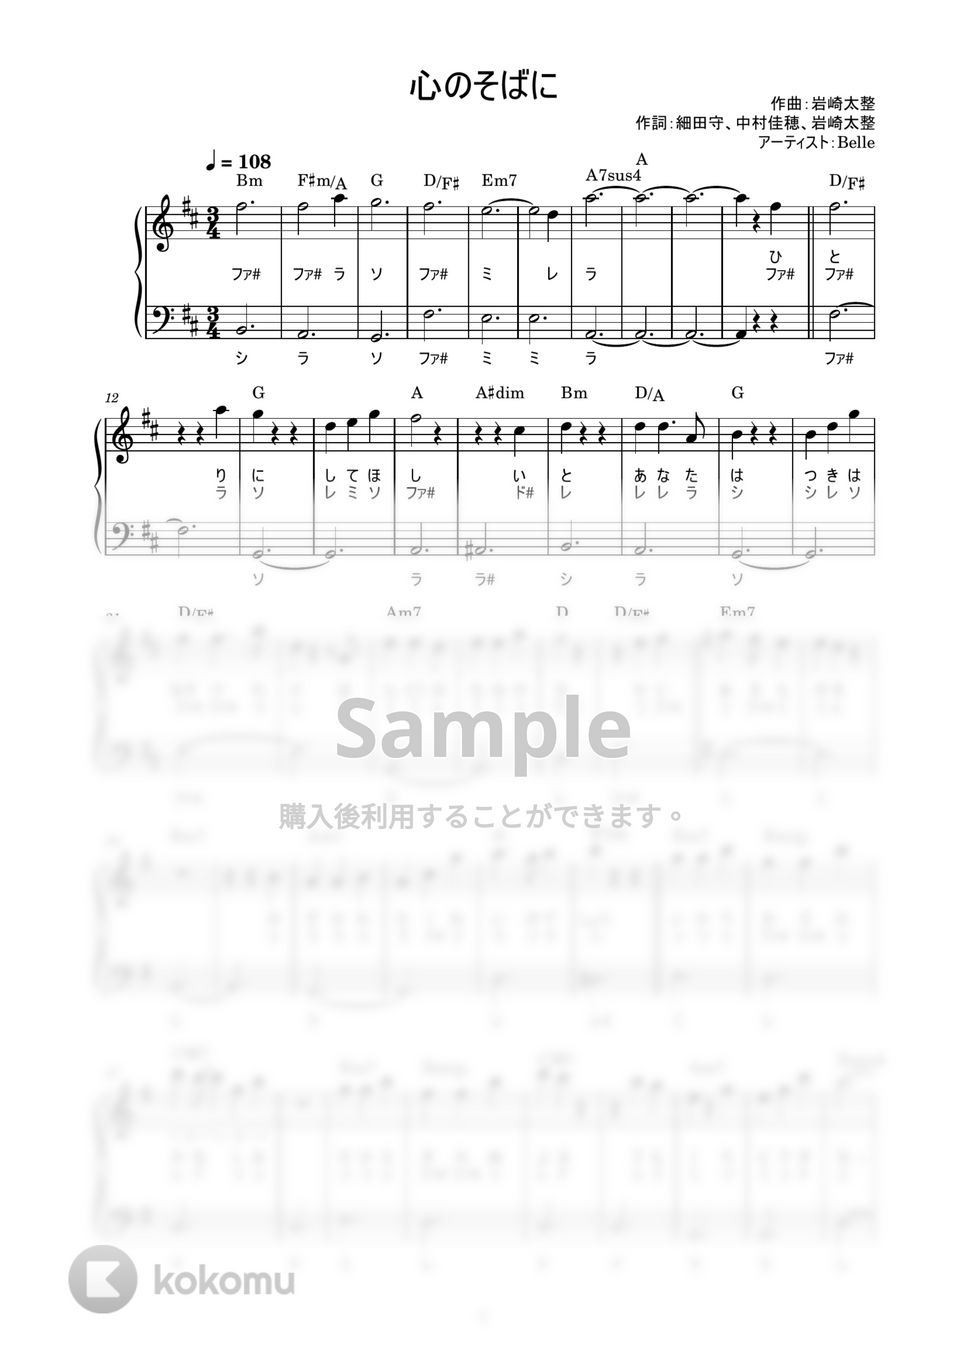 Belle - 心のそばに (かんたん / 歌詞付き / ドレミ付き / 初心者) by piano.tokyo